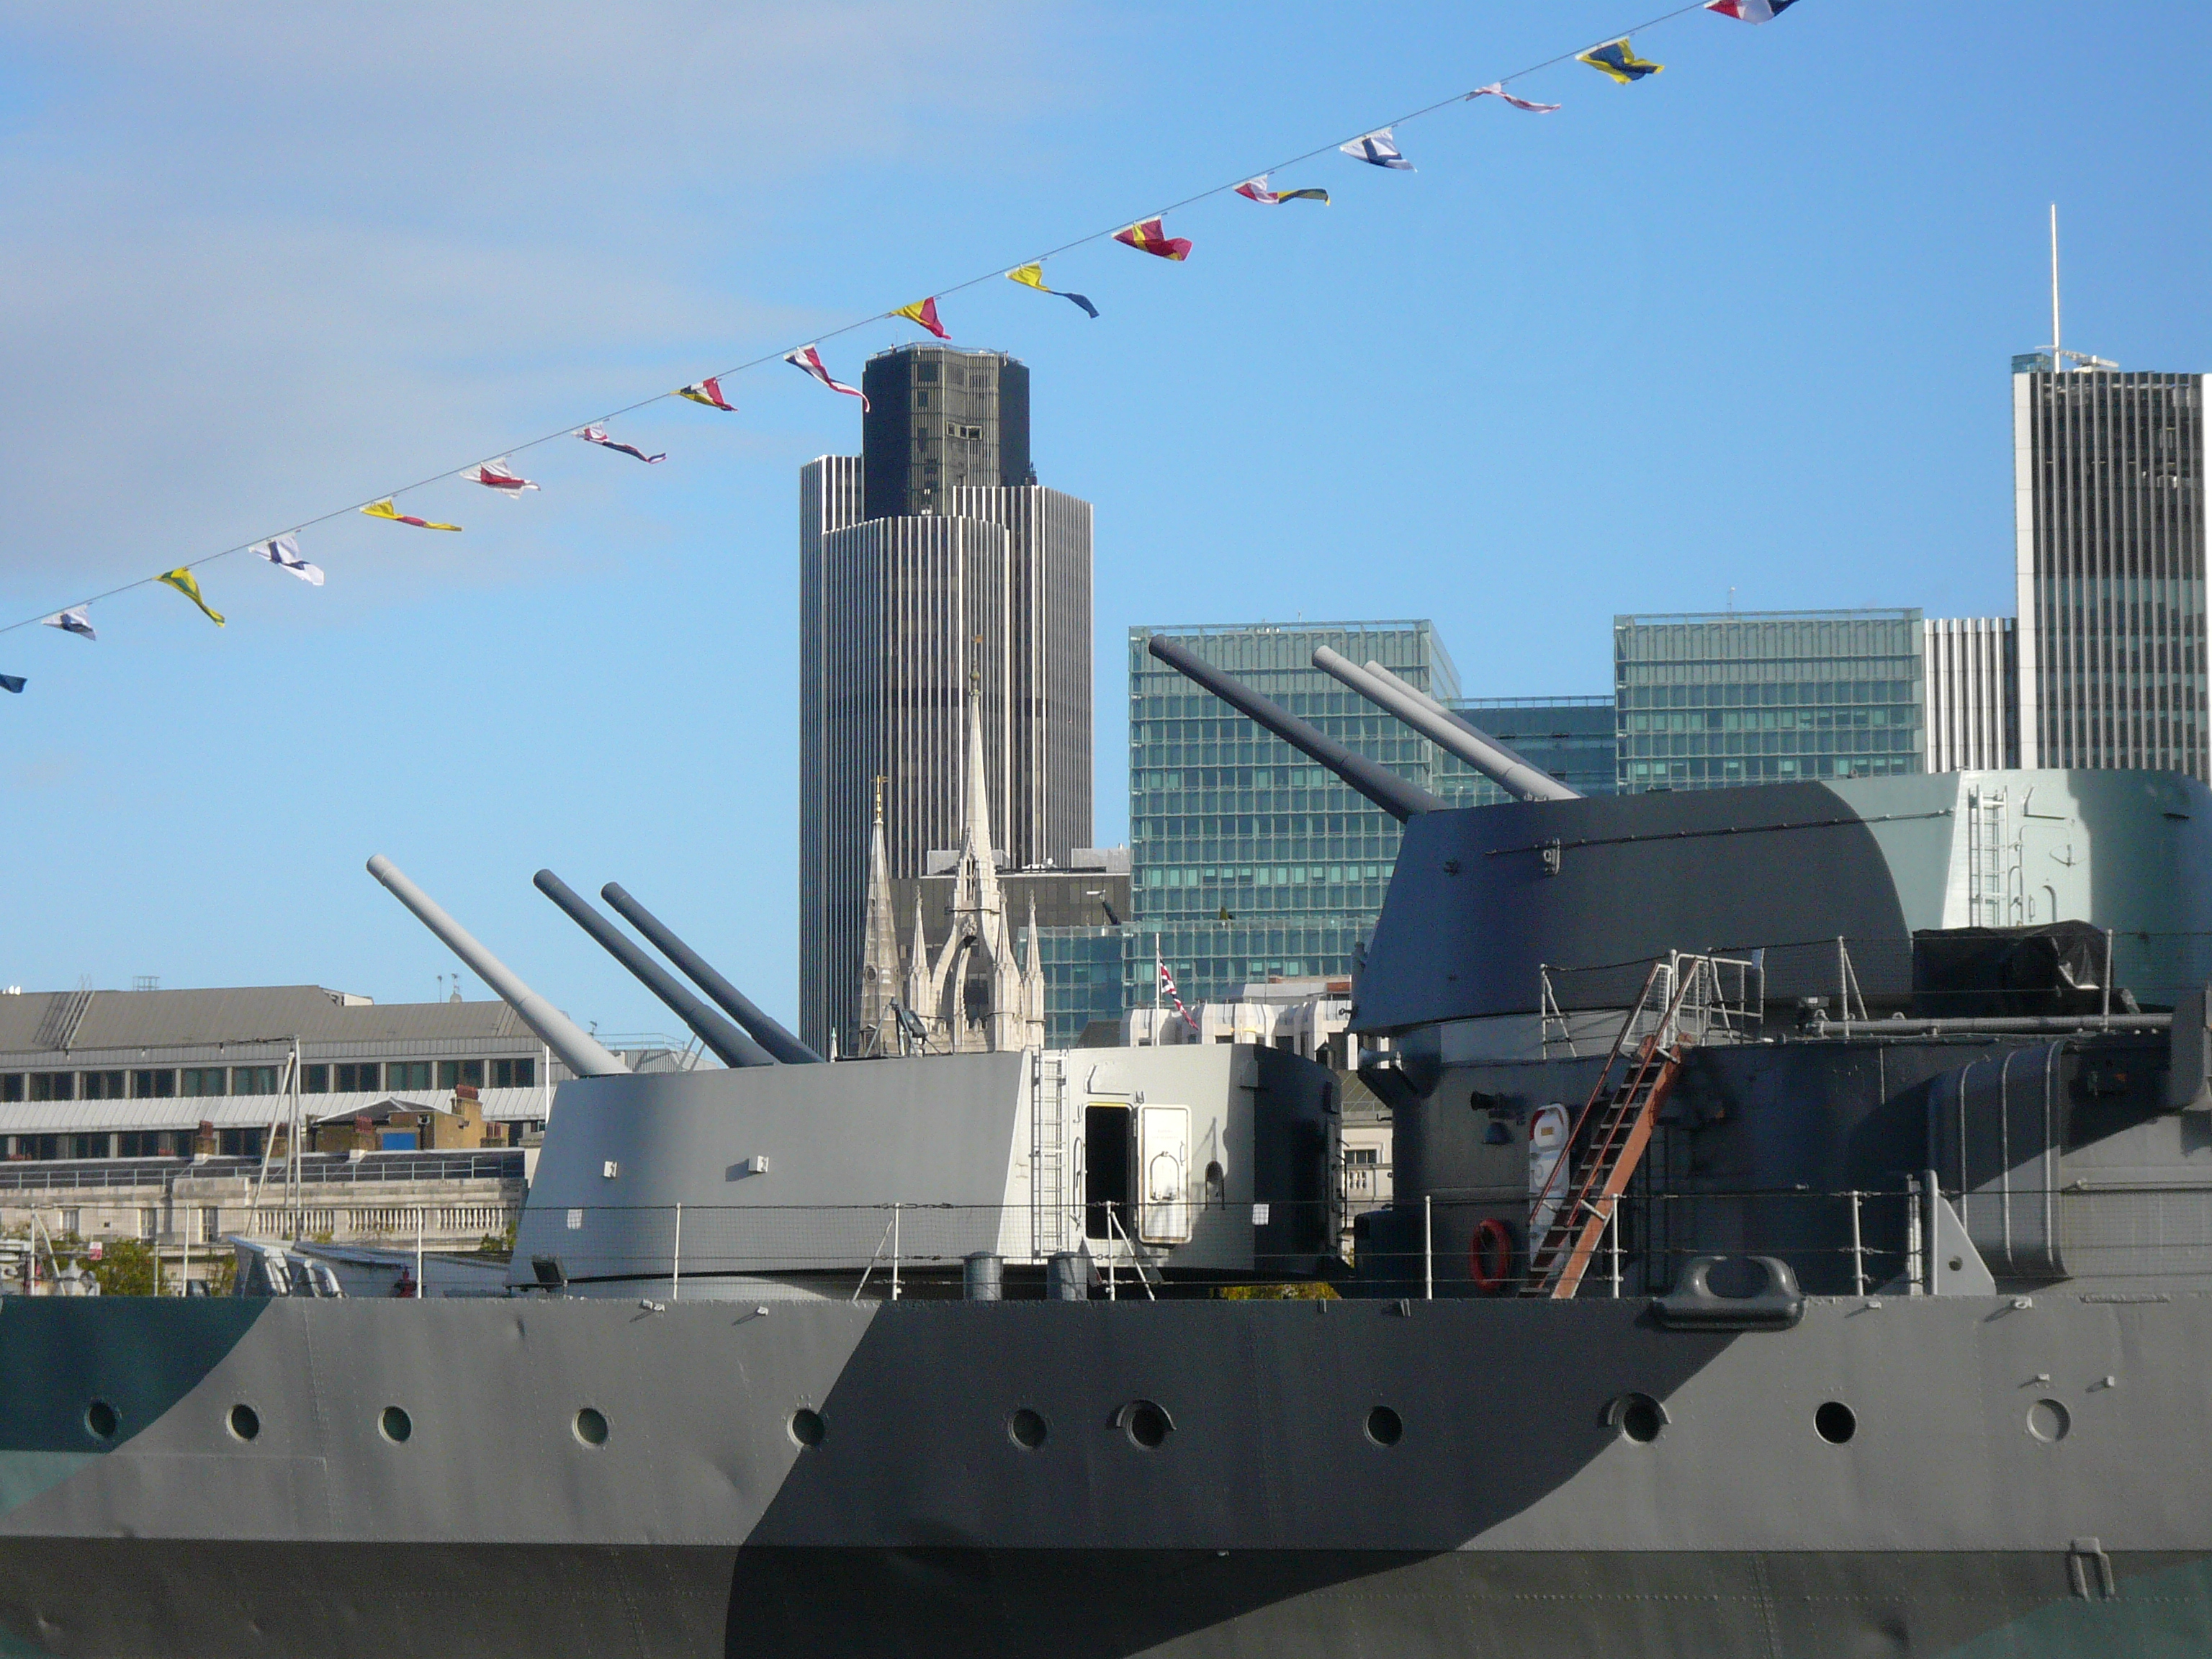 Museum ship HMS Belfast's forward turrets, London, England, United Kingdom, Oct 2010